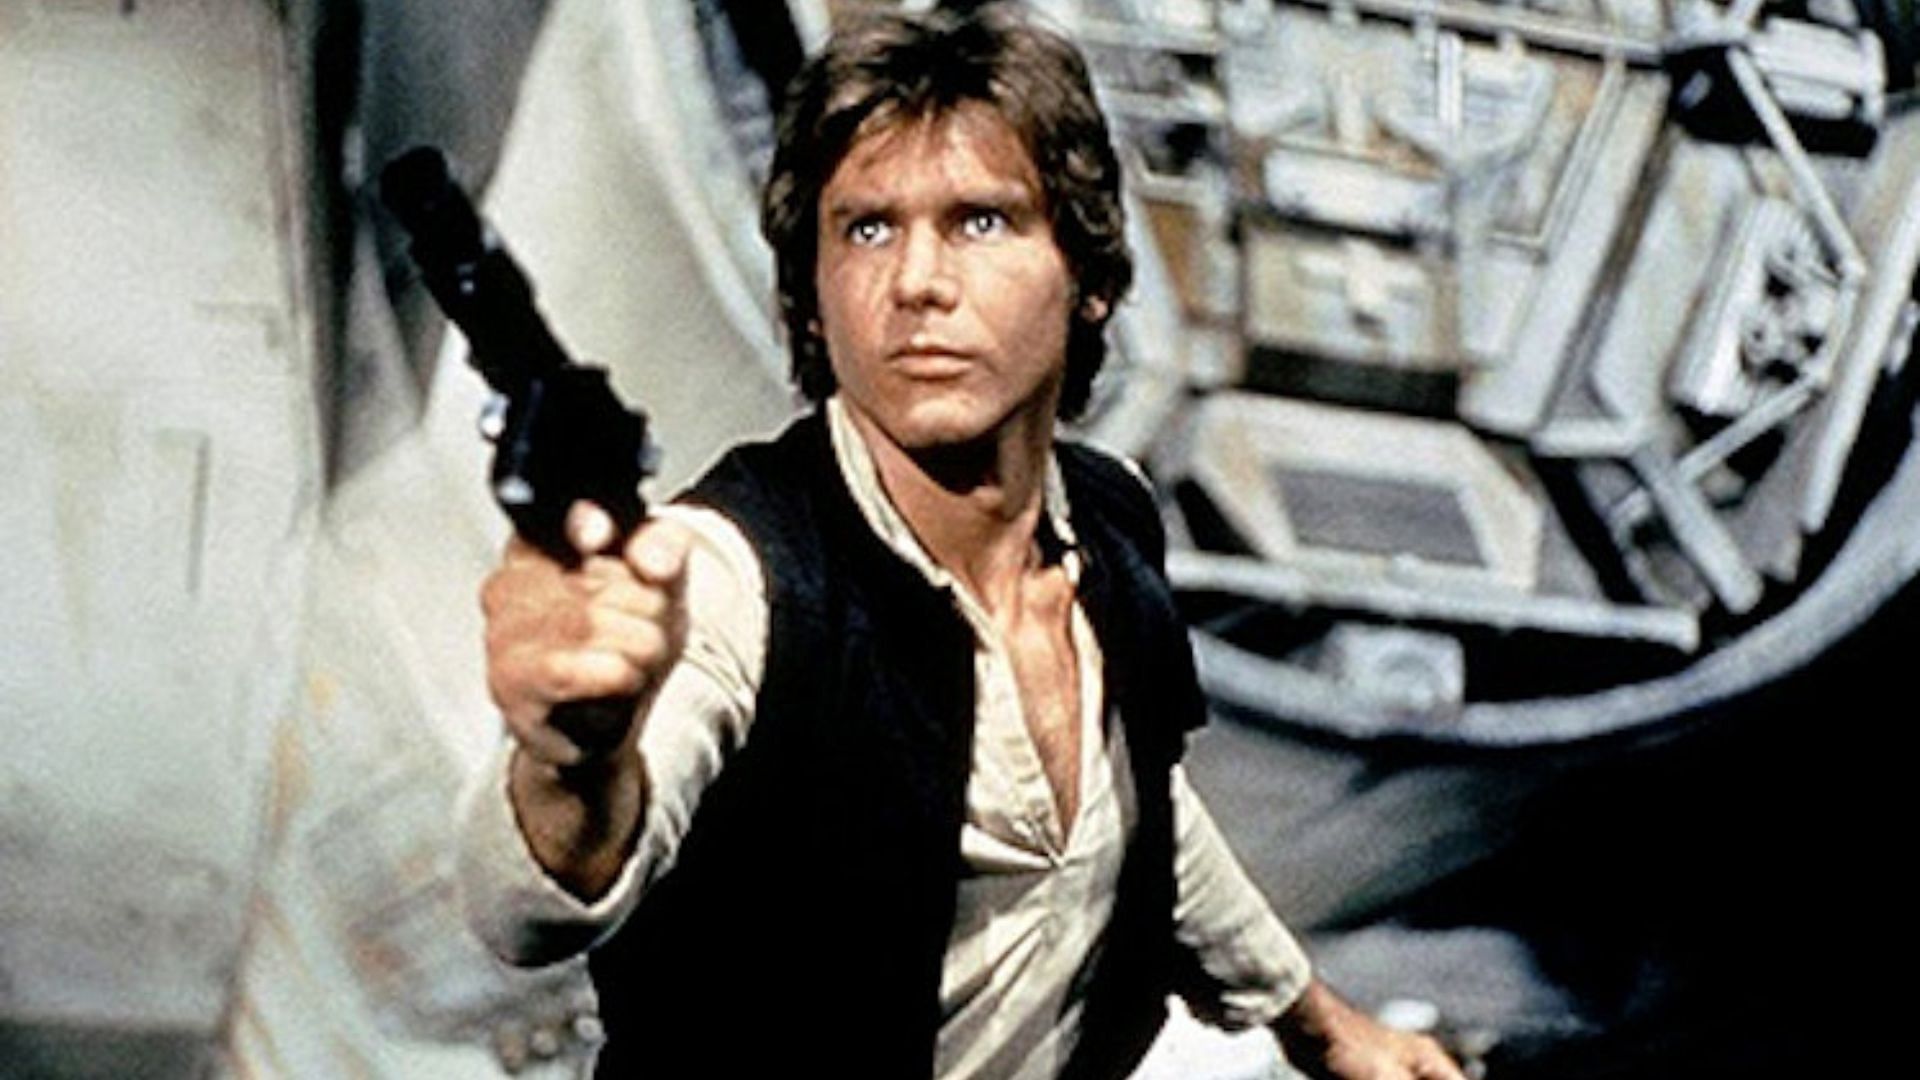 Harrison Ford in Star Wars (Image via Empire)